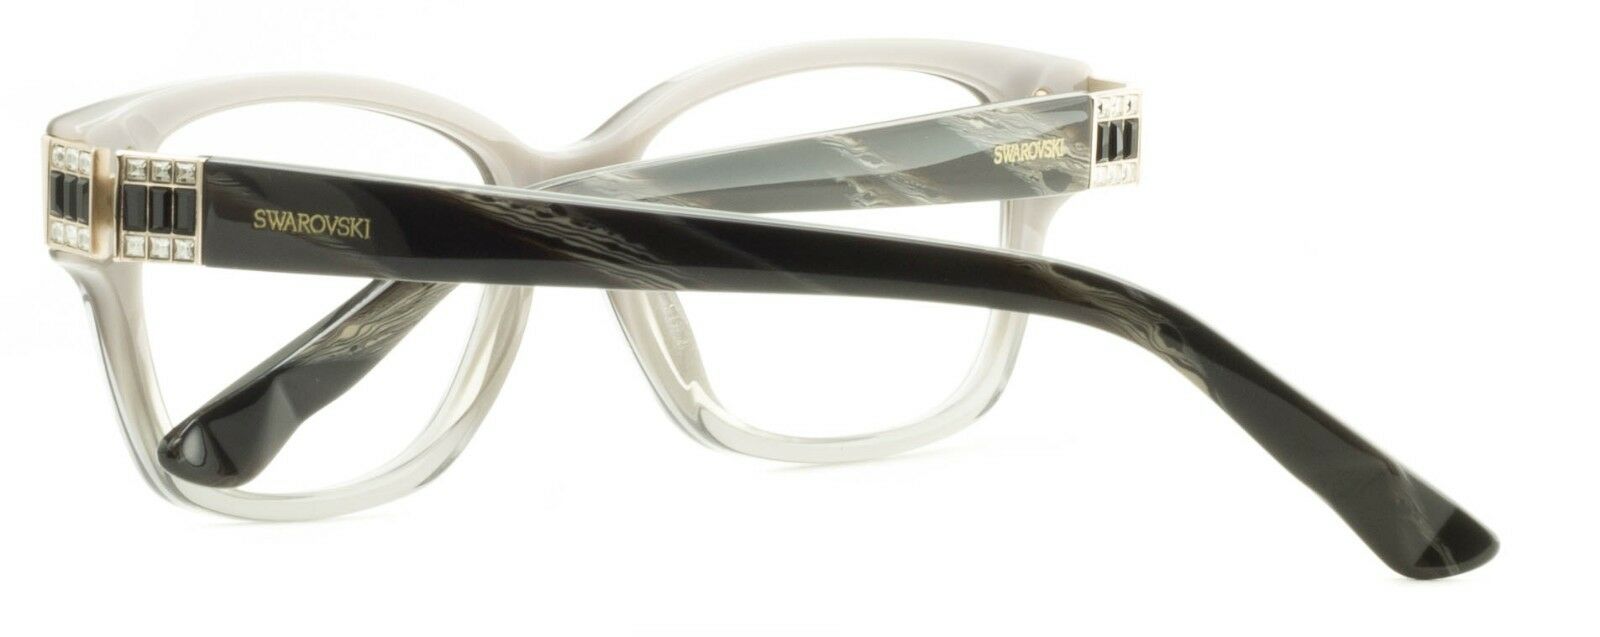 SWAROVSKI DYLAN SW 5090 038 Eyewear FRAMES RX Optical Glasses Eyeglasses - BNIB